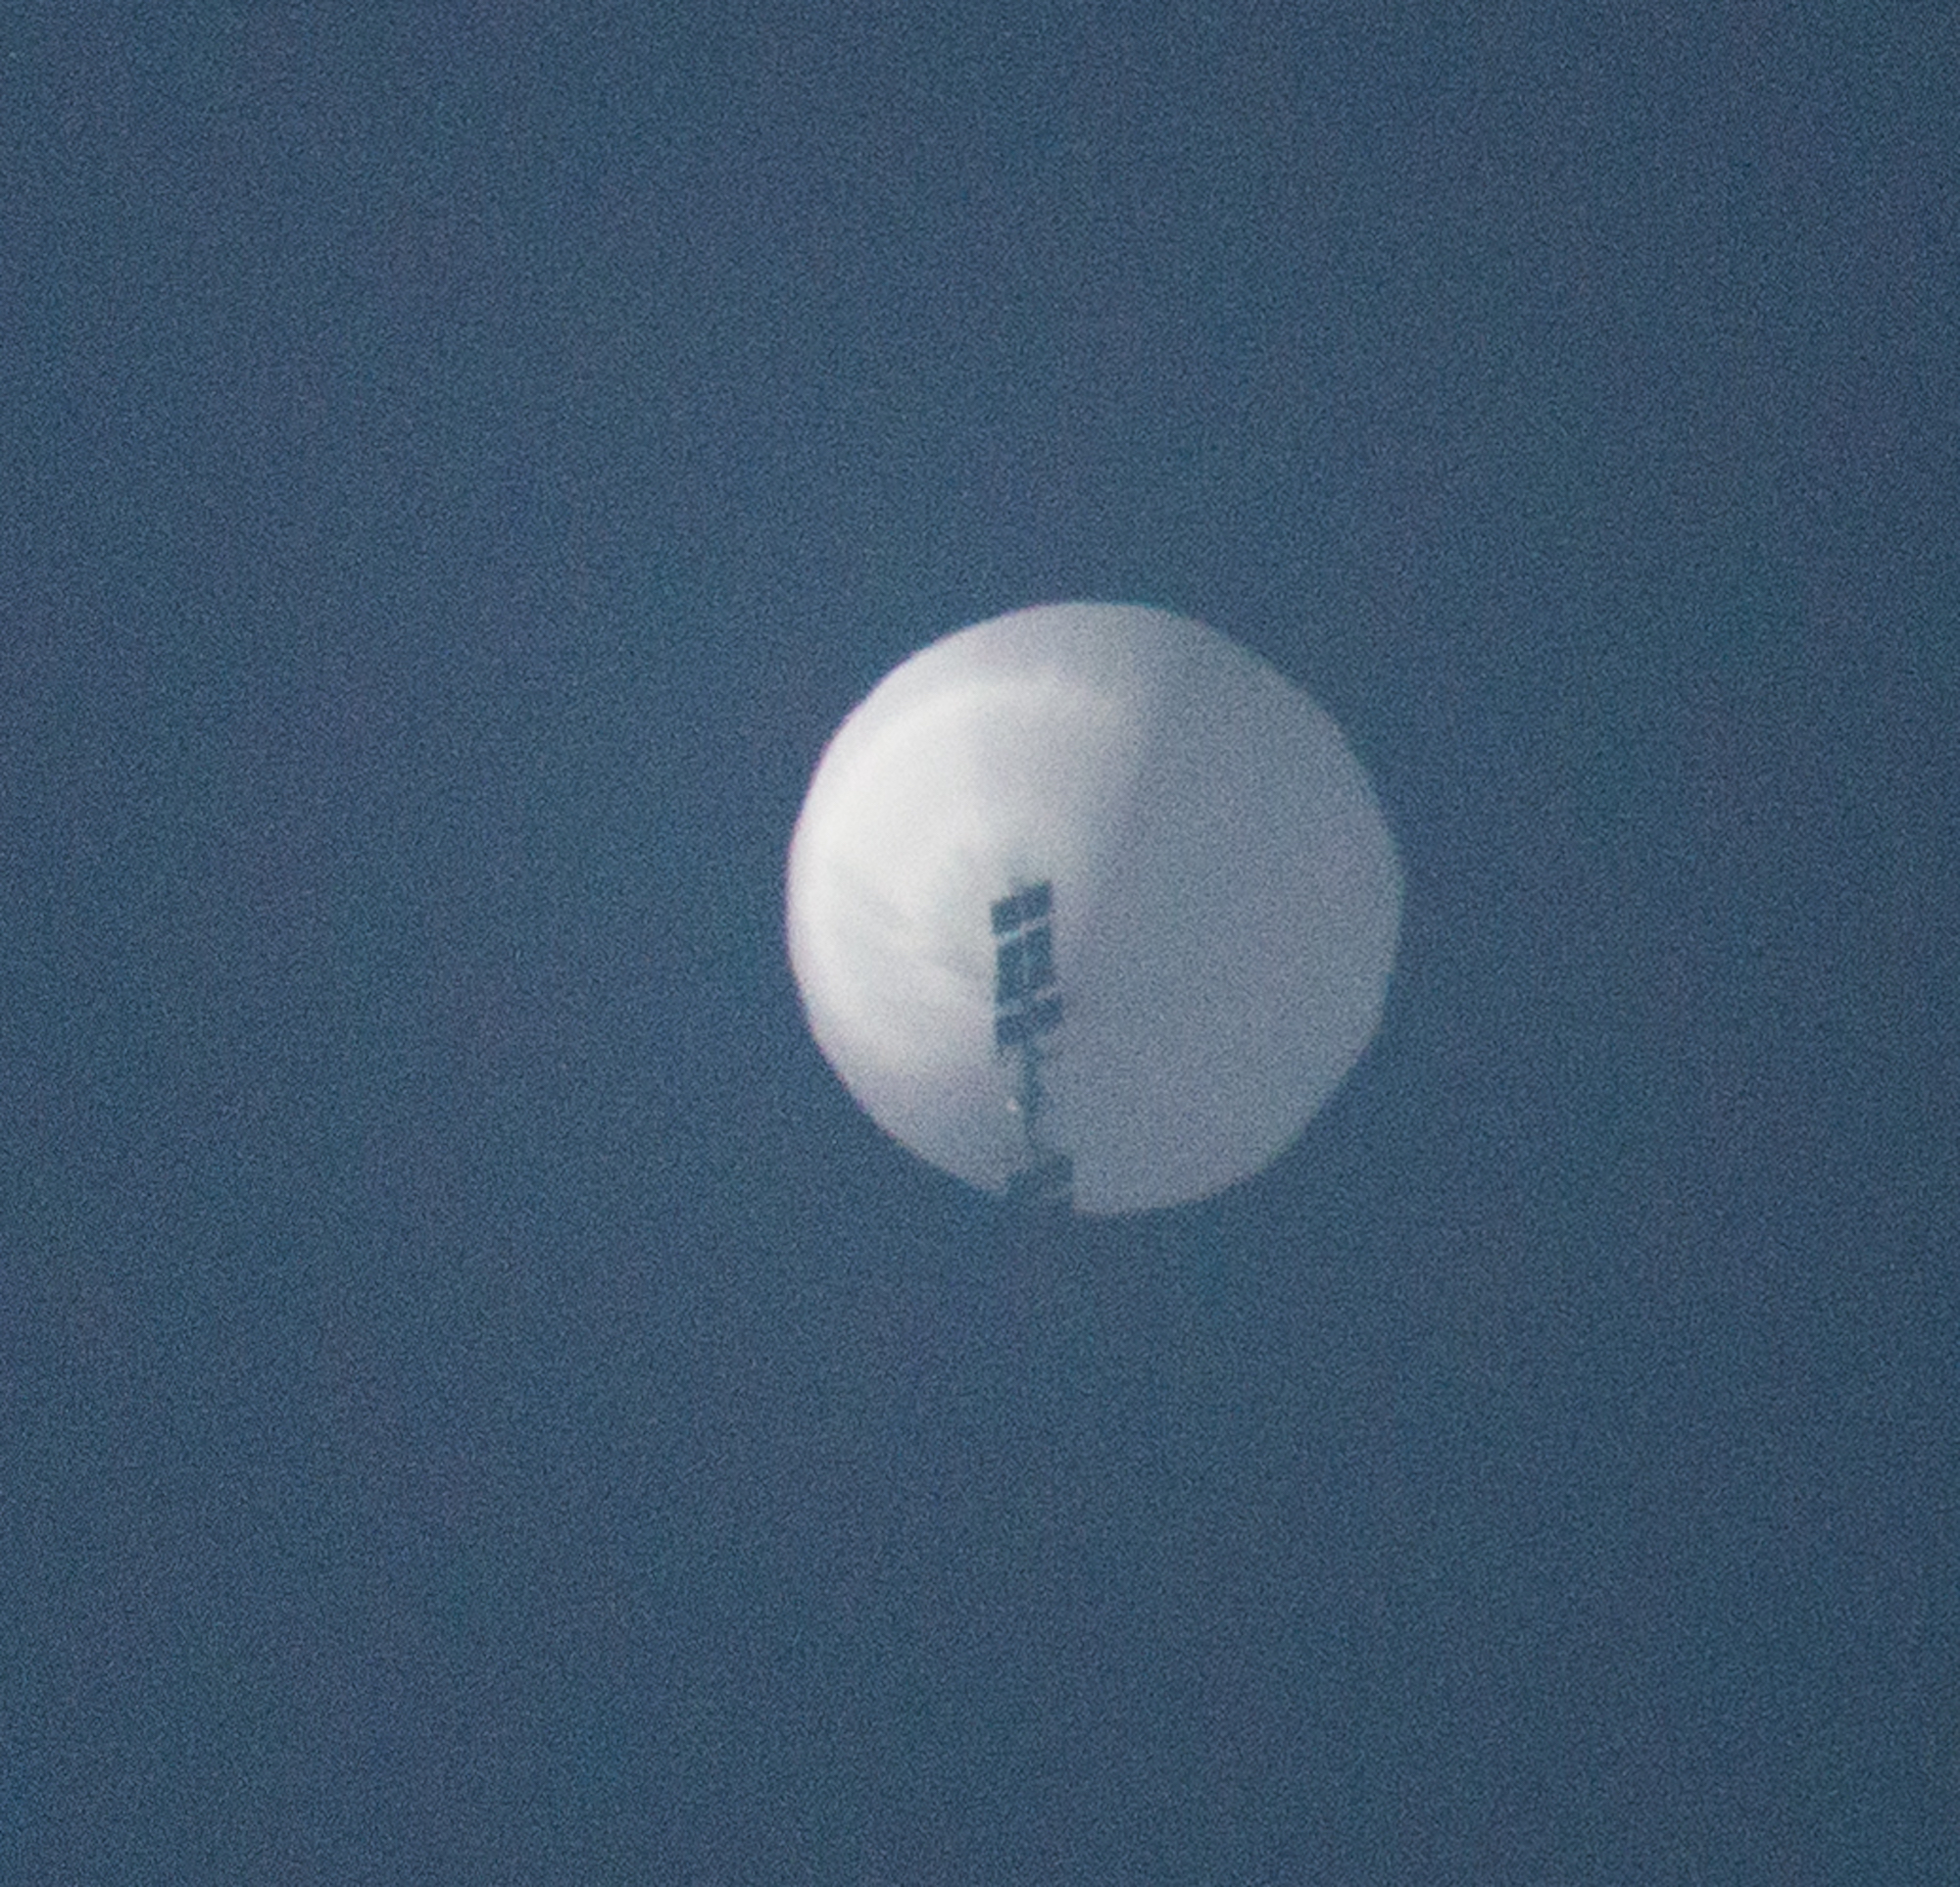 Chinese surveillance balloon over Billings, Montana, US